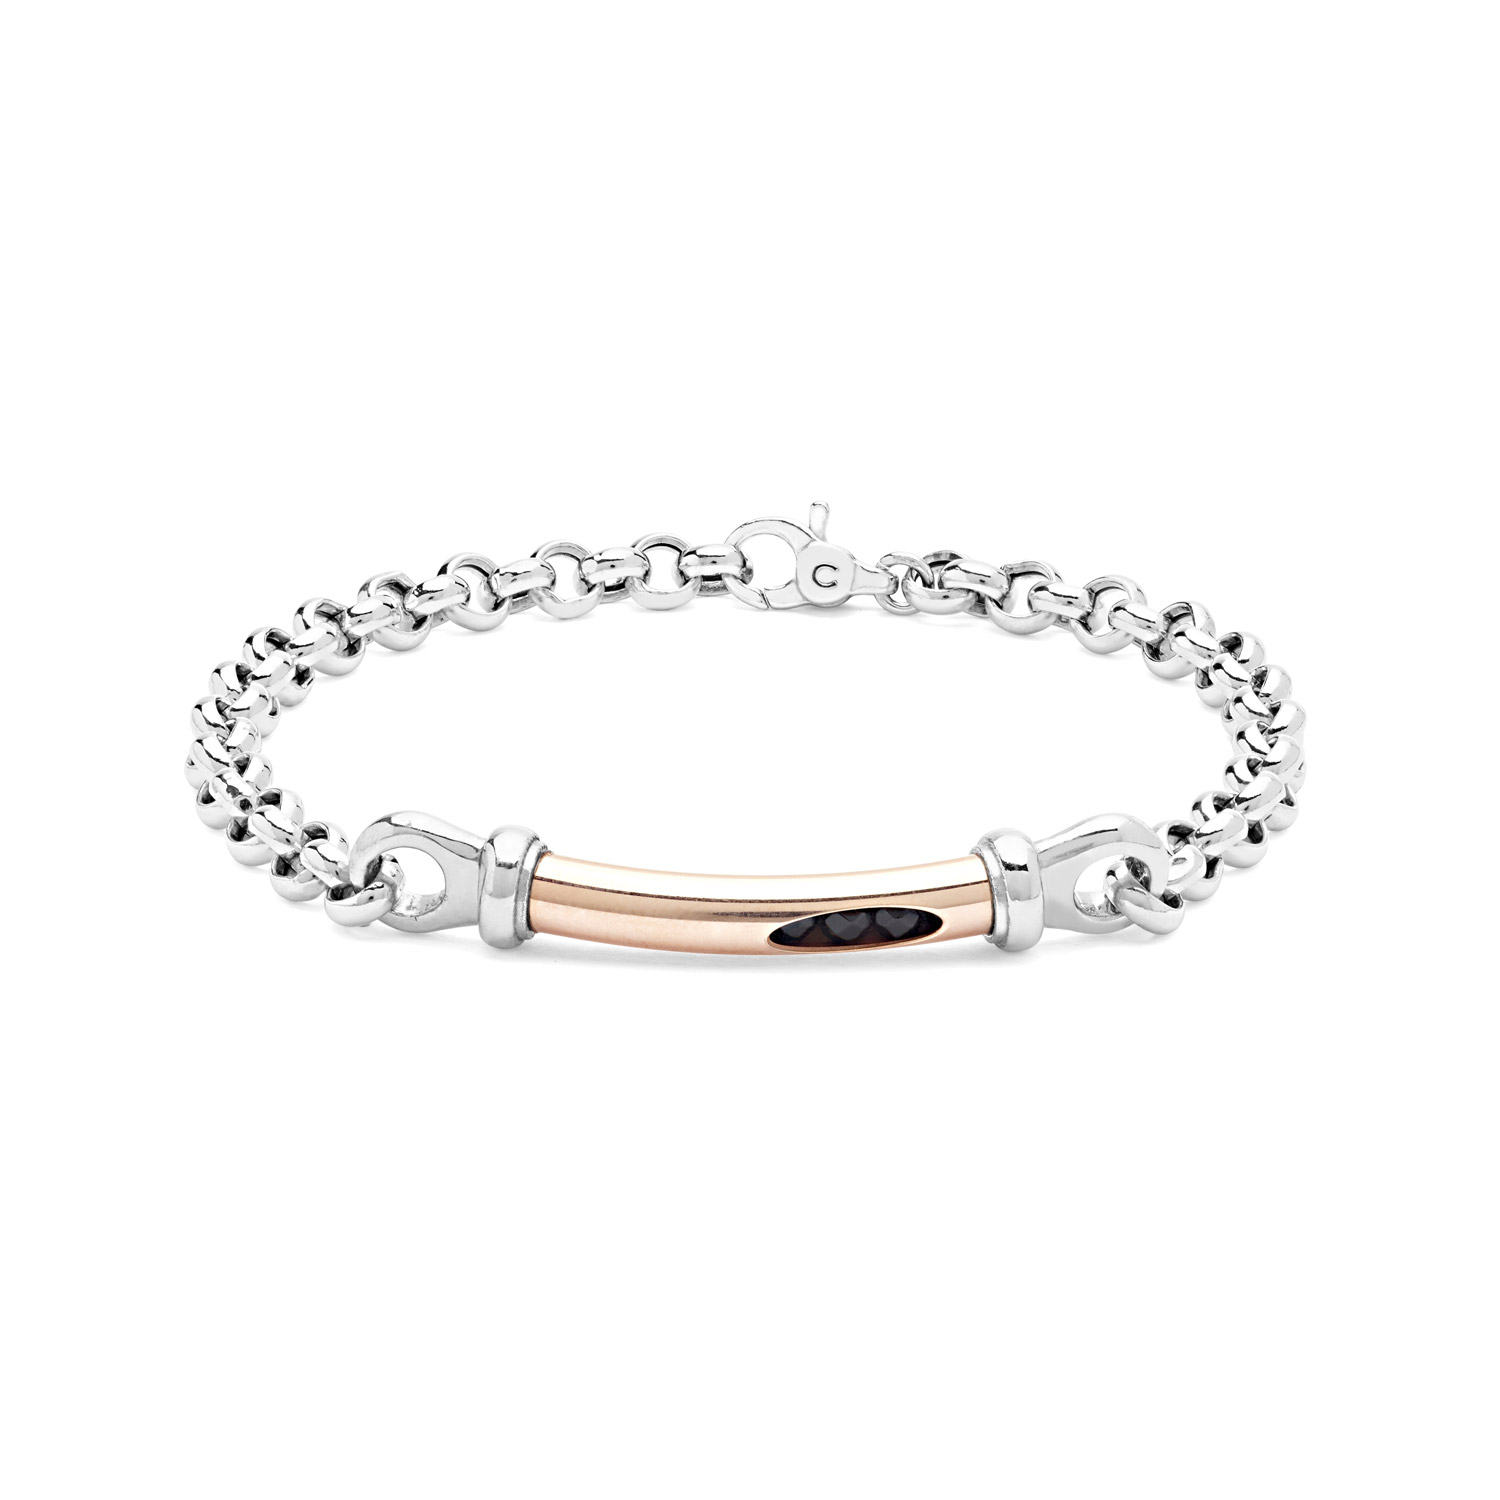 Comete Jewelry Men's Bracelet Chain in Silver and Black Zircons